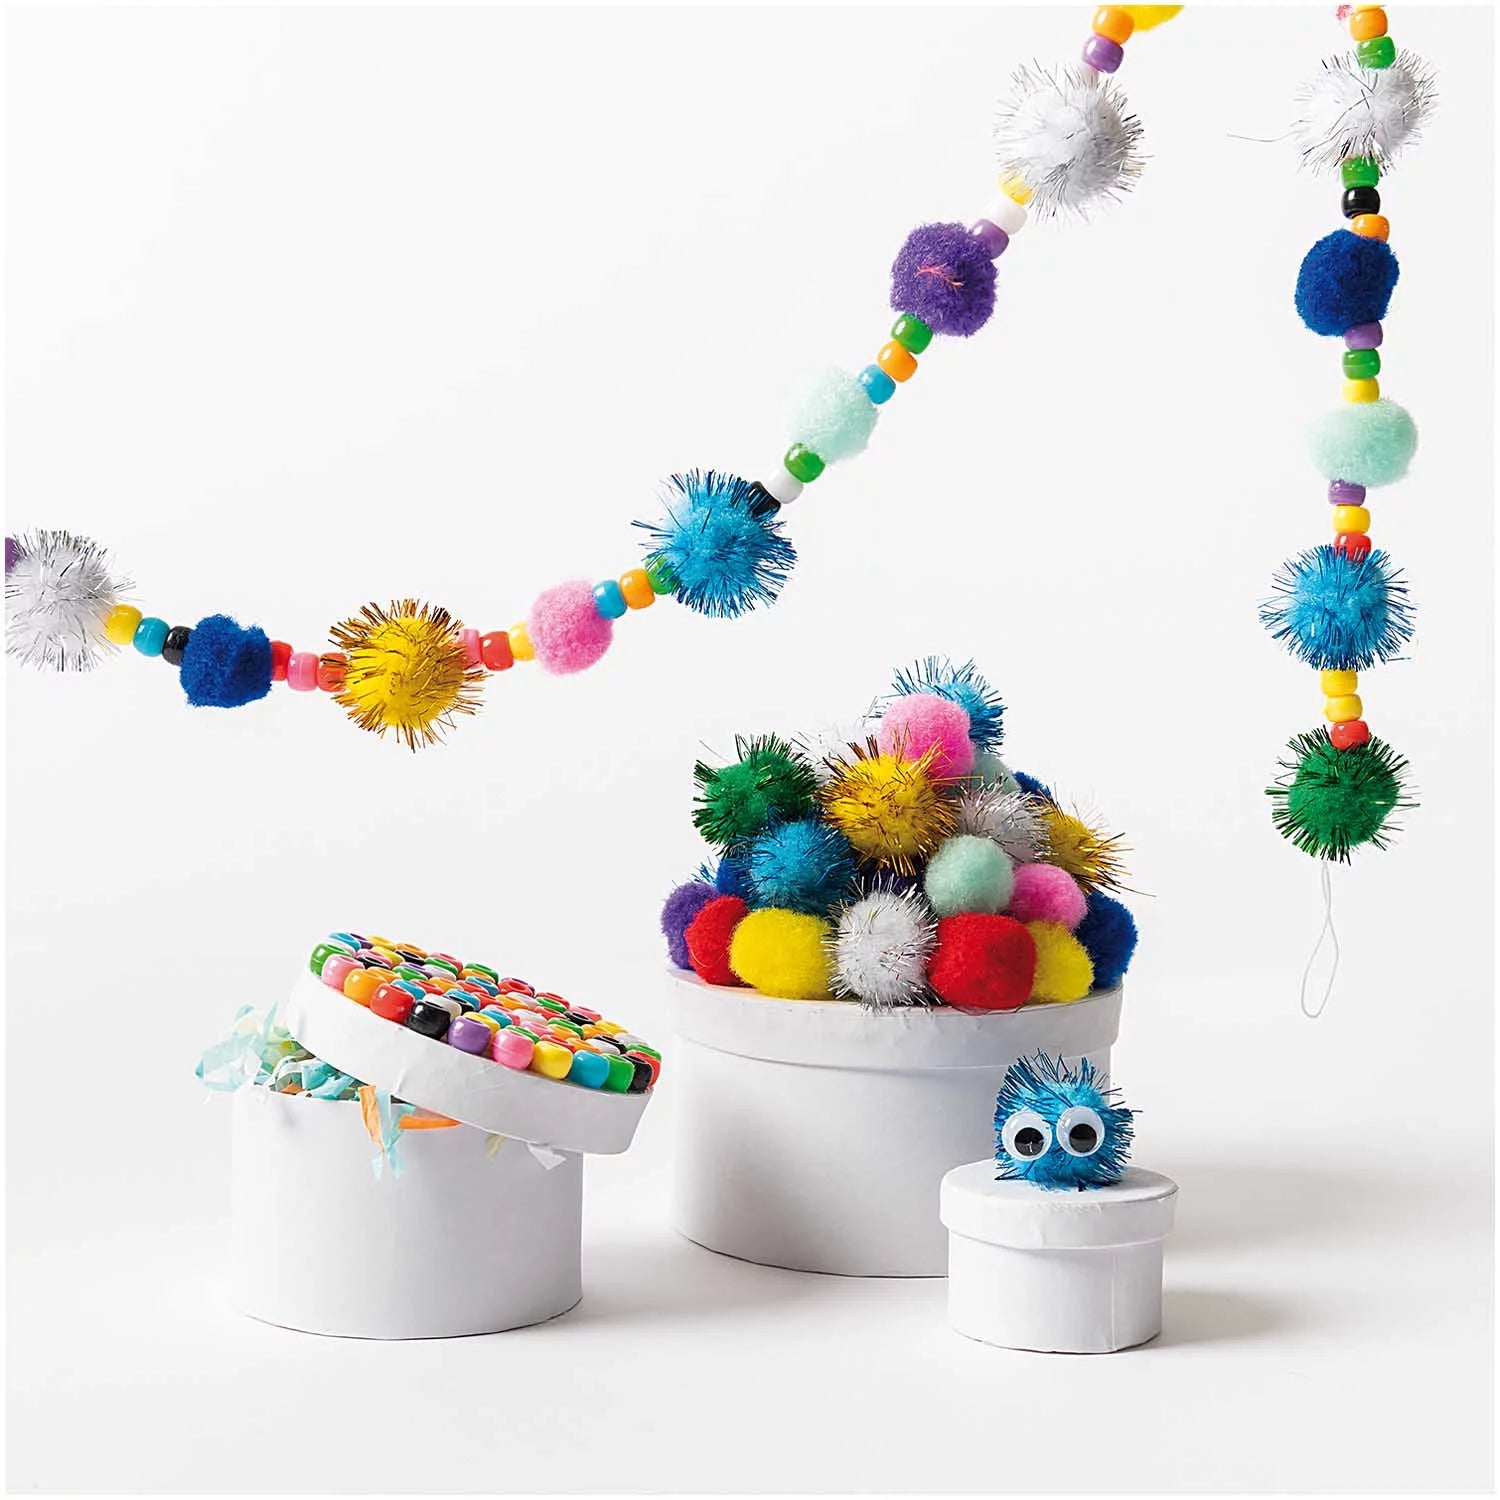 Craft set - colorful 150 pieces